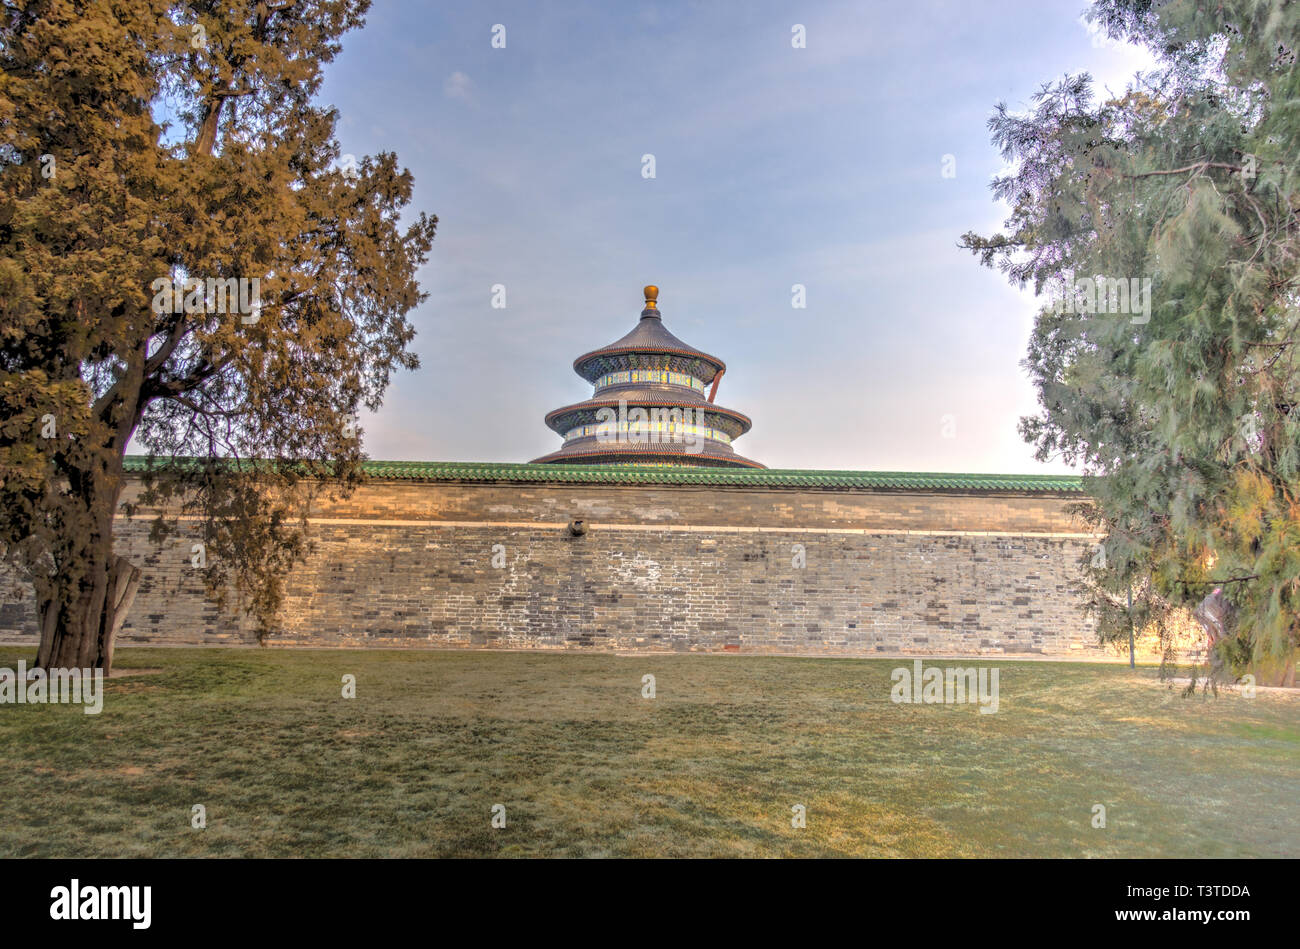 Temple of Heaven, Beijing, China Stock Photo